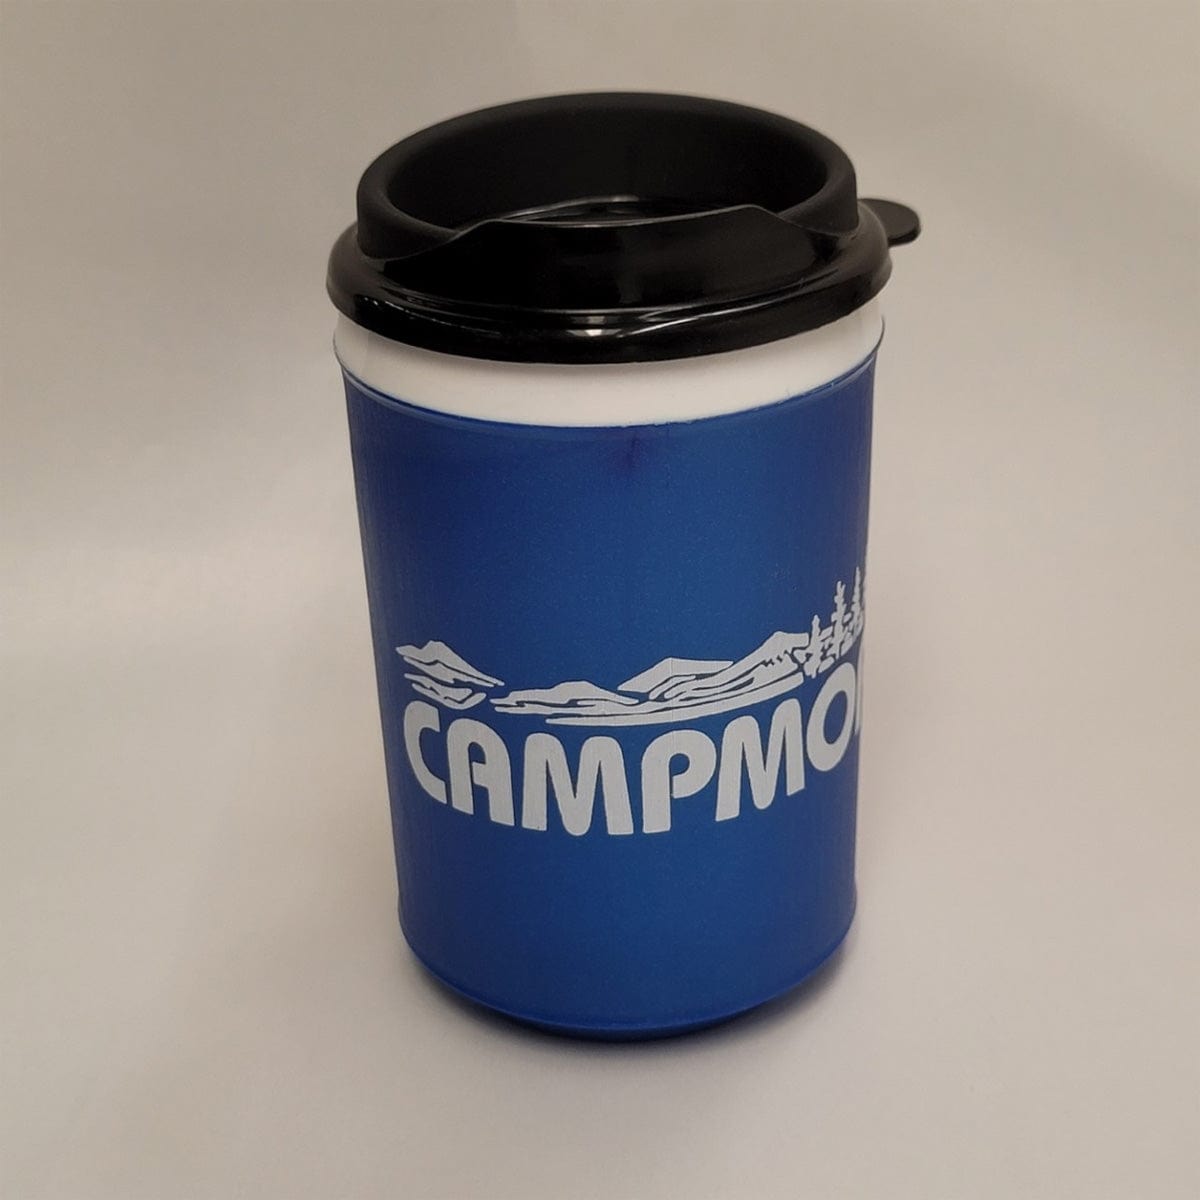 Camp Cup Travel Mug | MiiR | 12oz